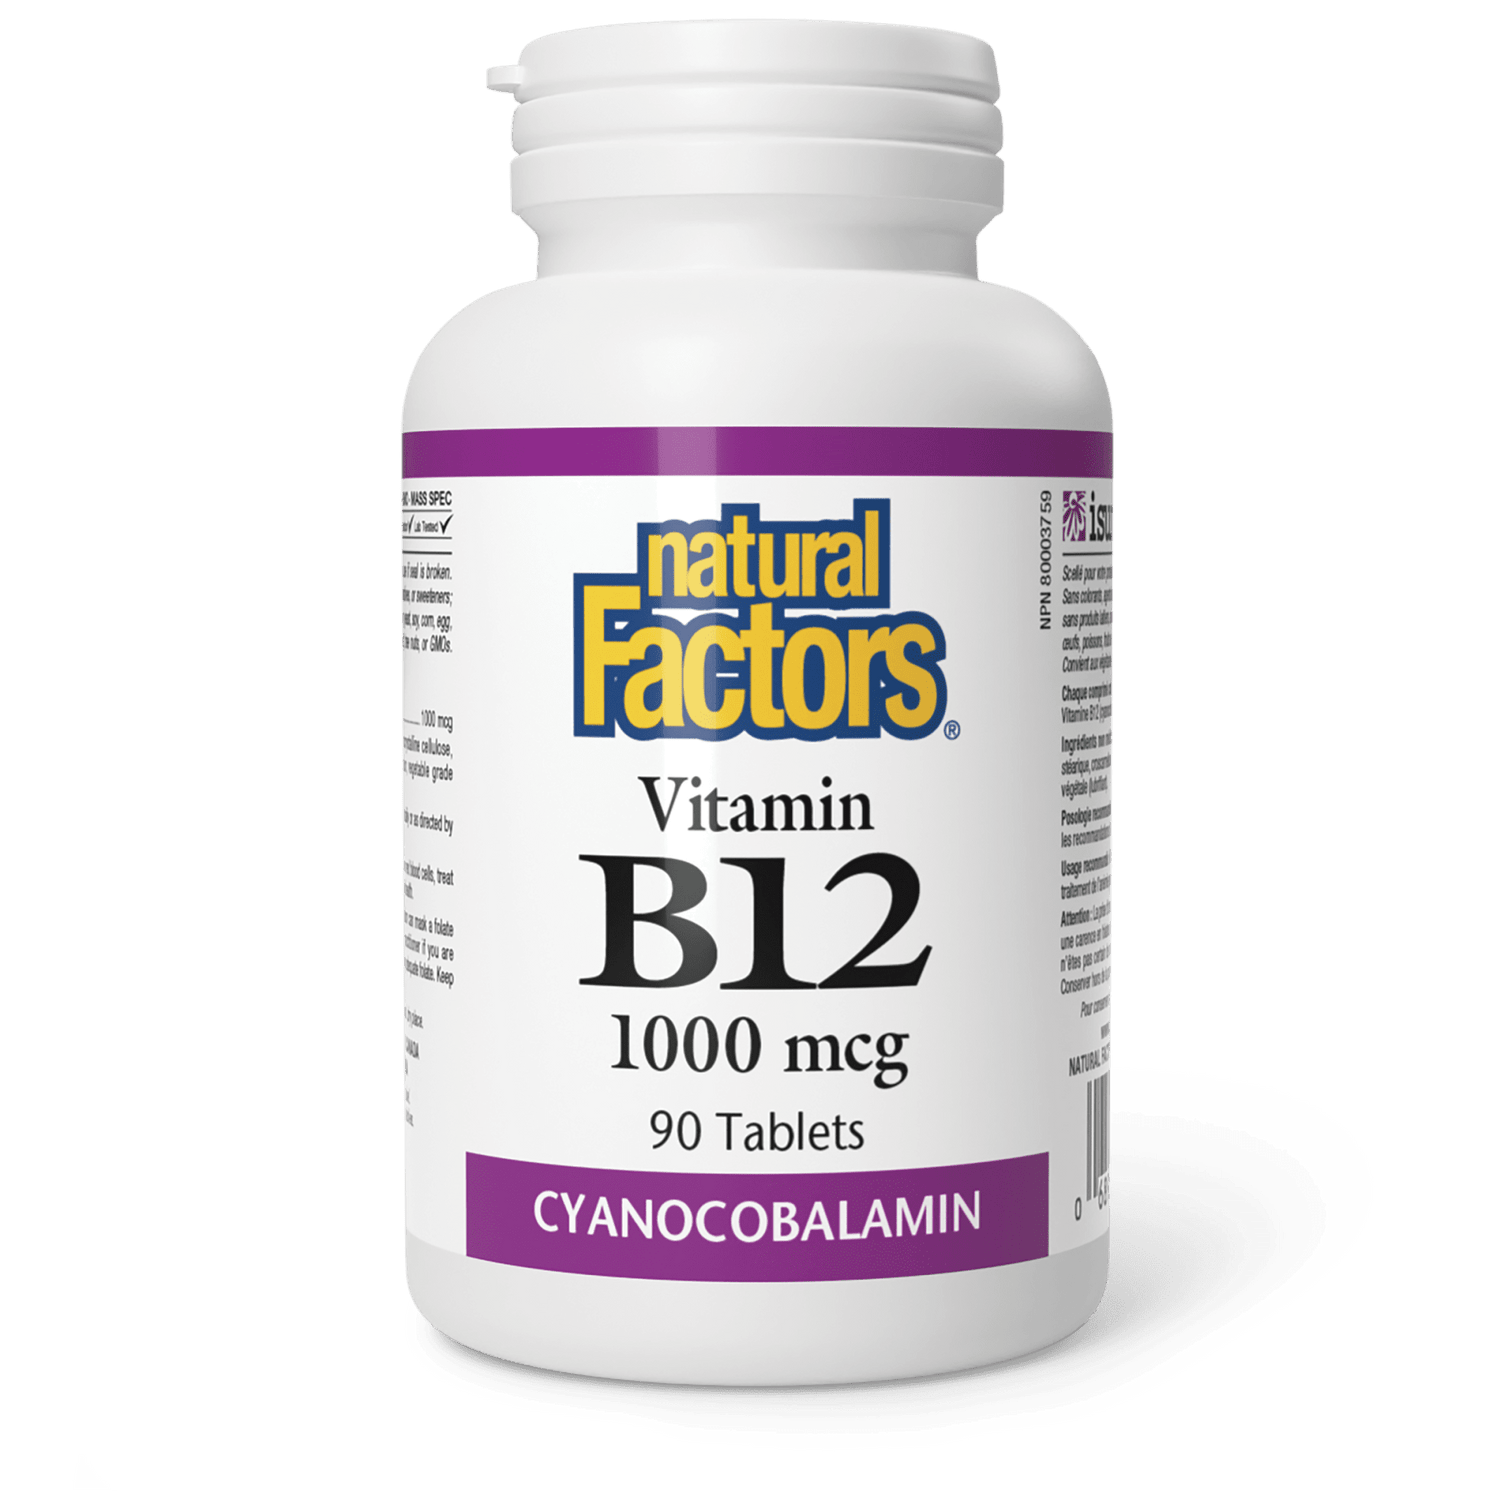 Vitamin B12 1000 mcg, Natural Factors|v|image|1246